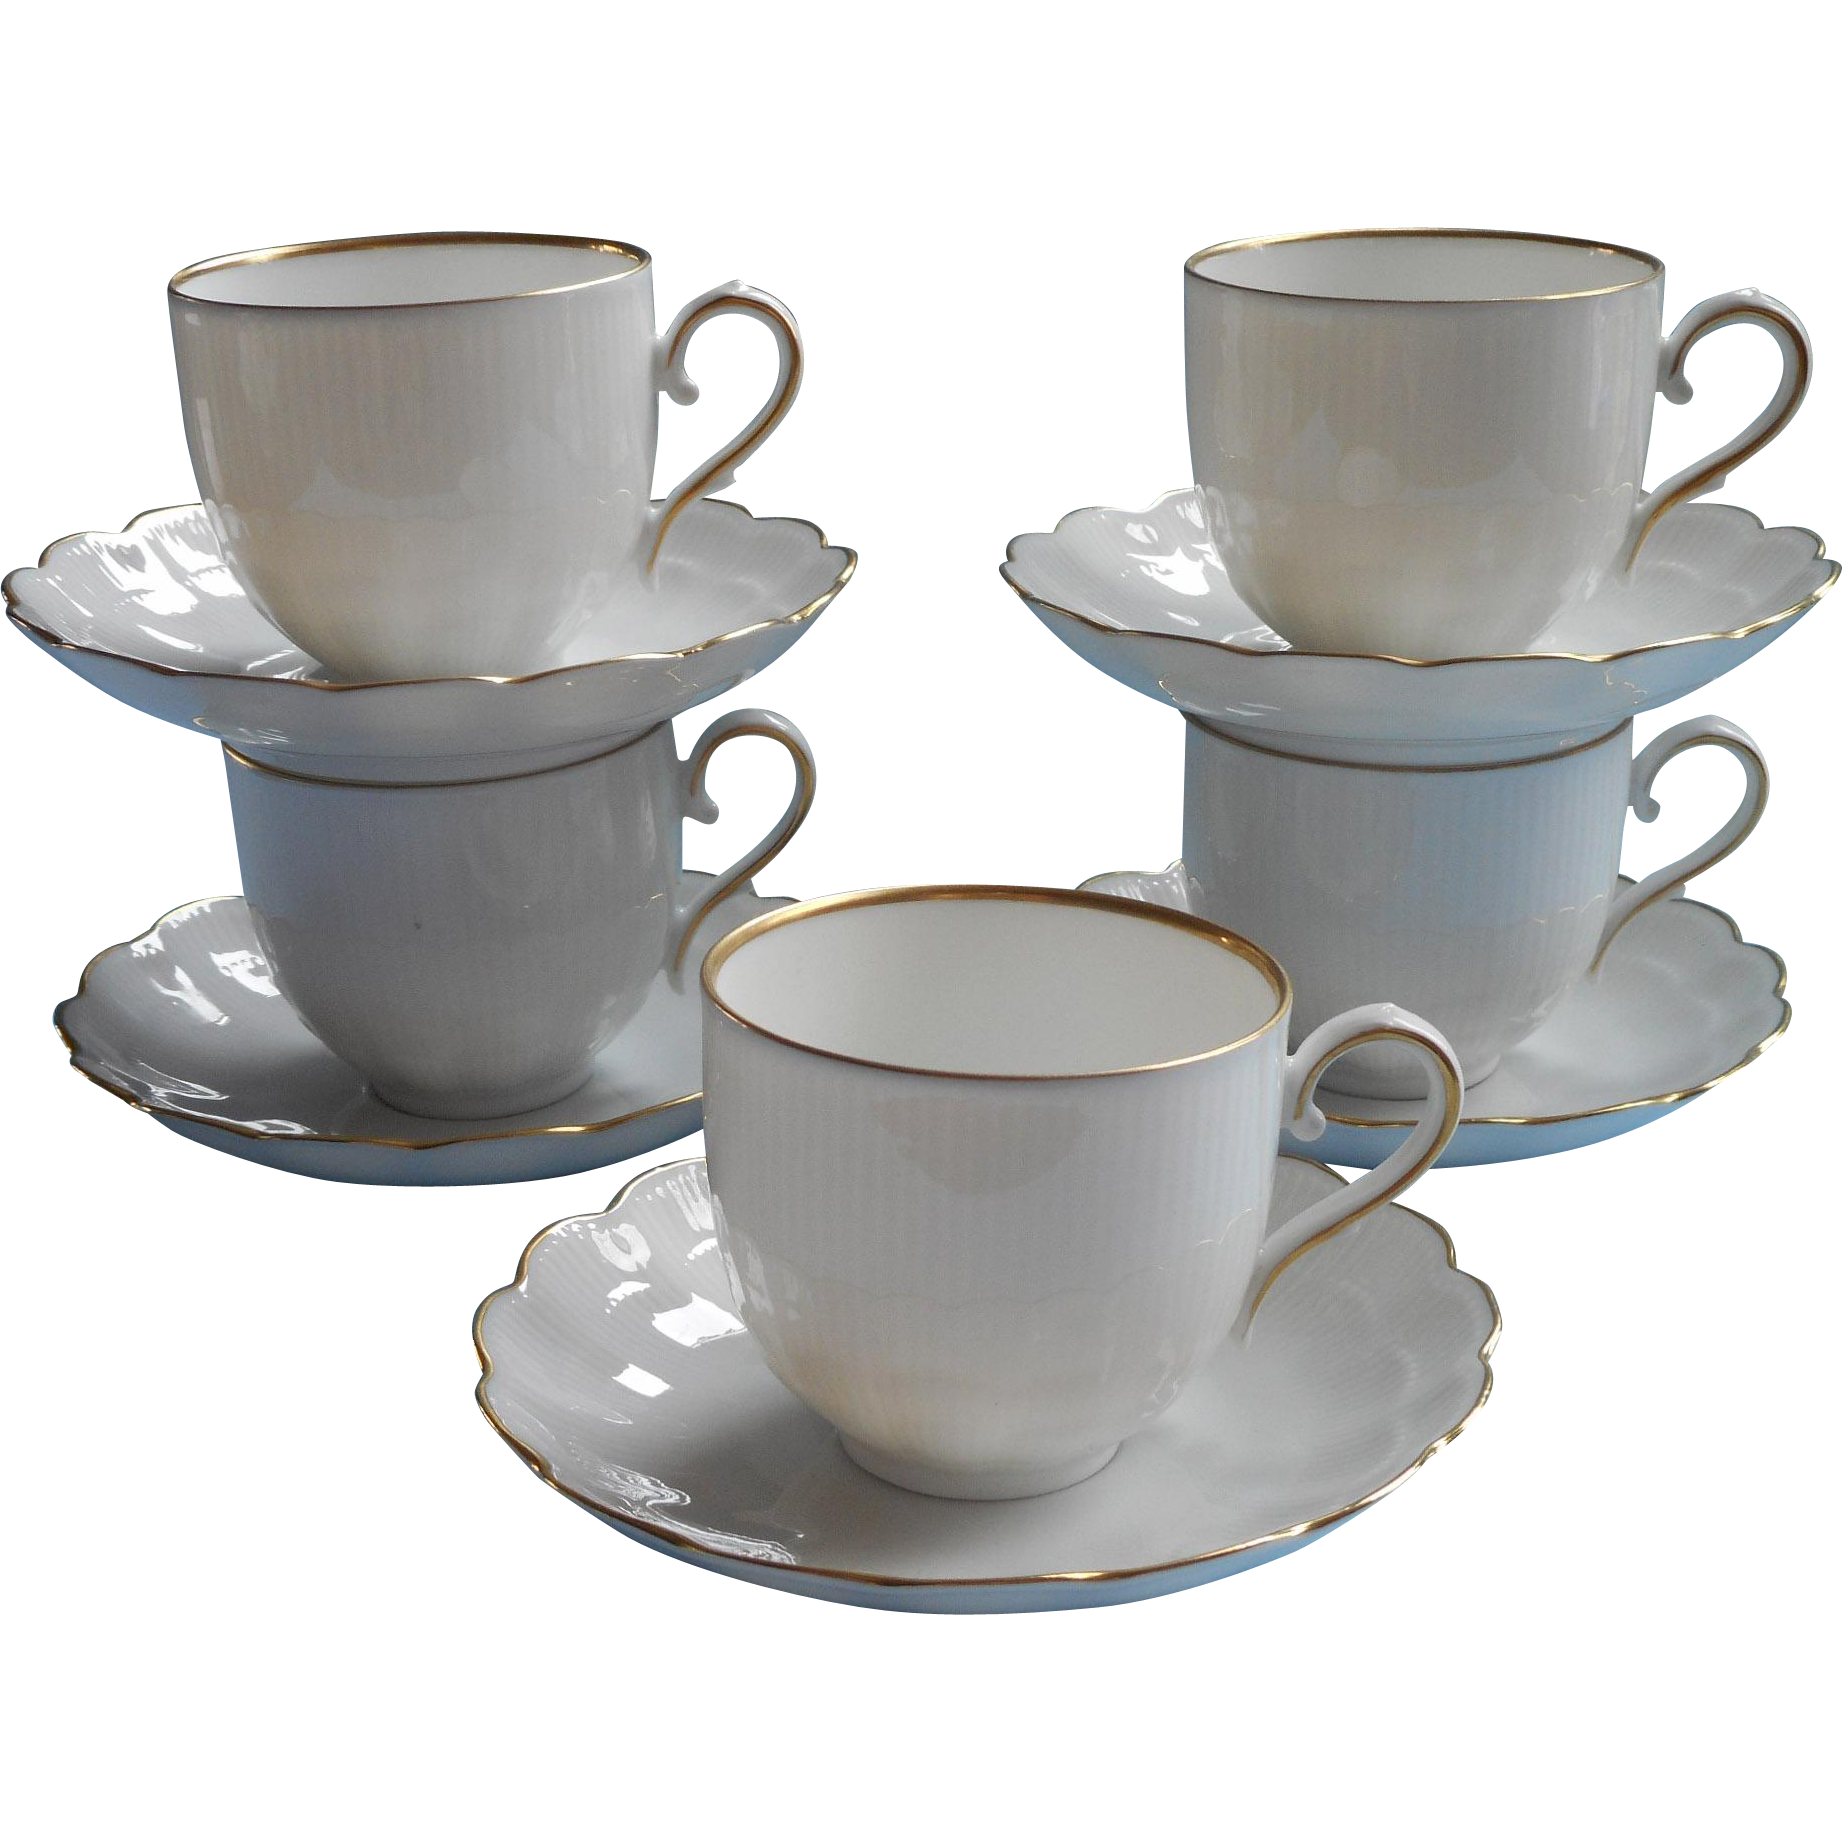 Golden Coffee Cup Porcelain Tableware Mug Saucer Clipart